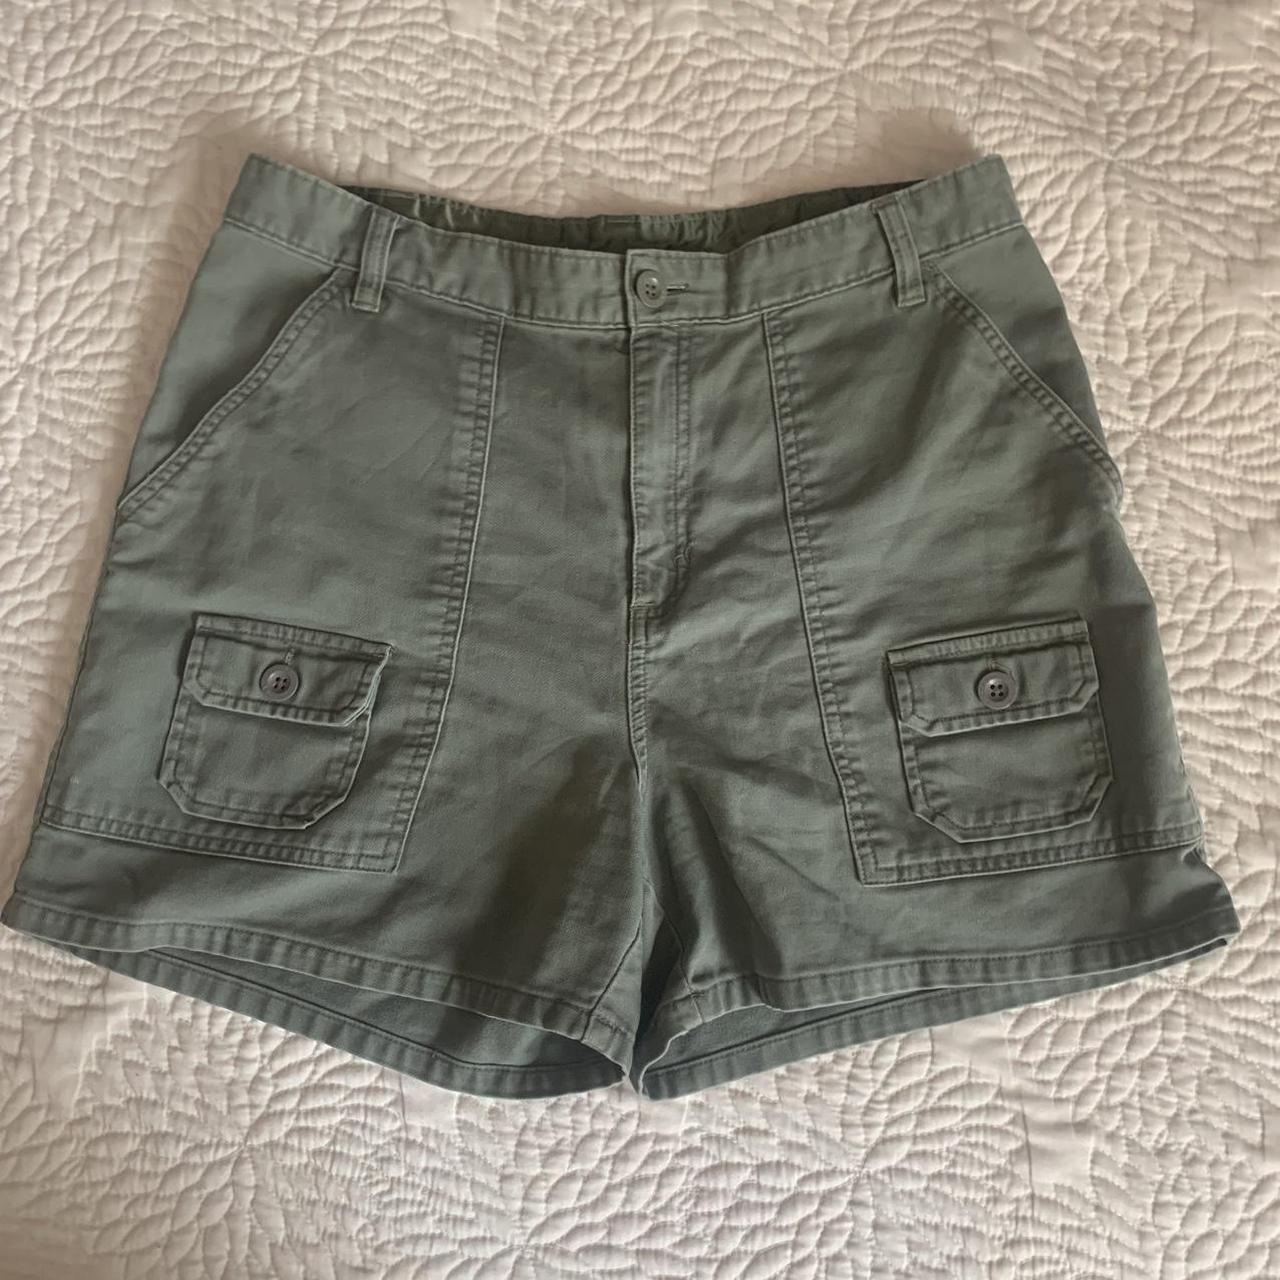 High Sierra Women's Khaki and Green Shorts